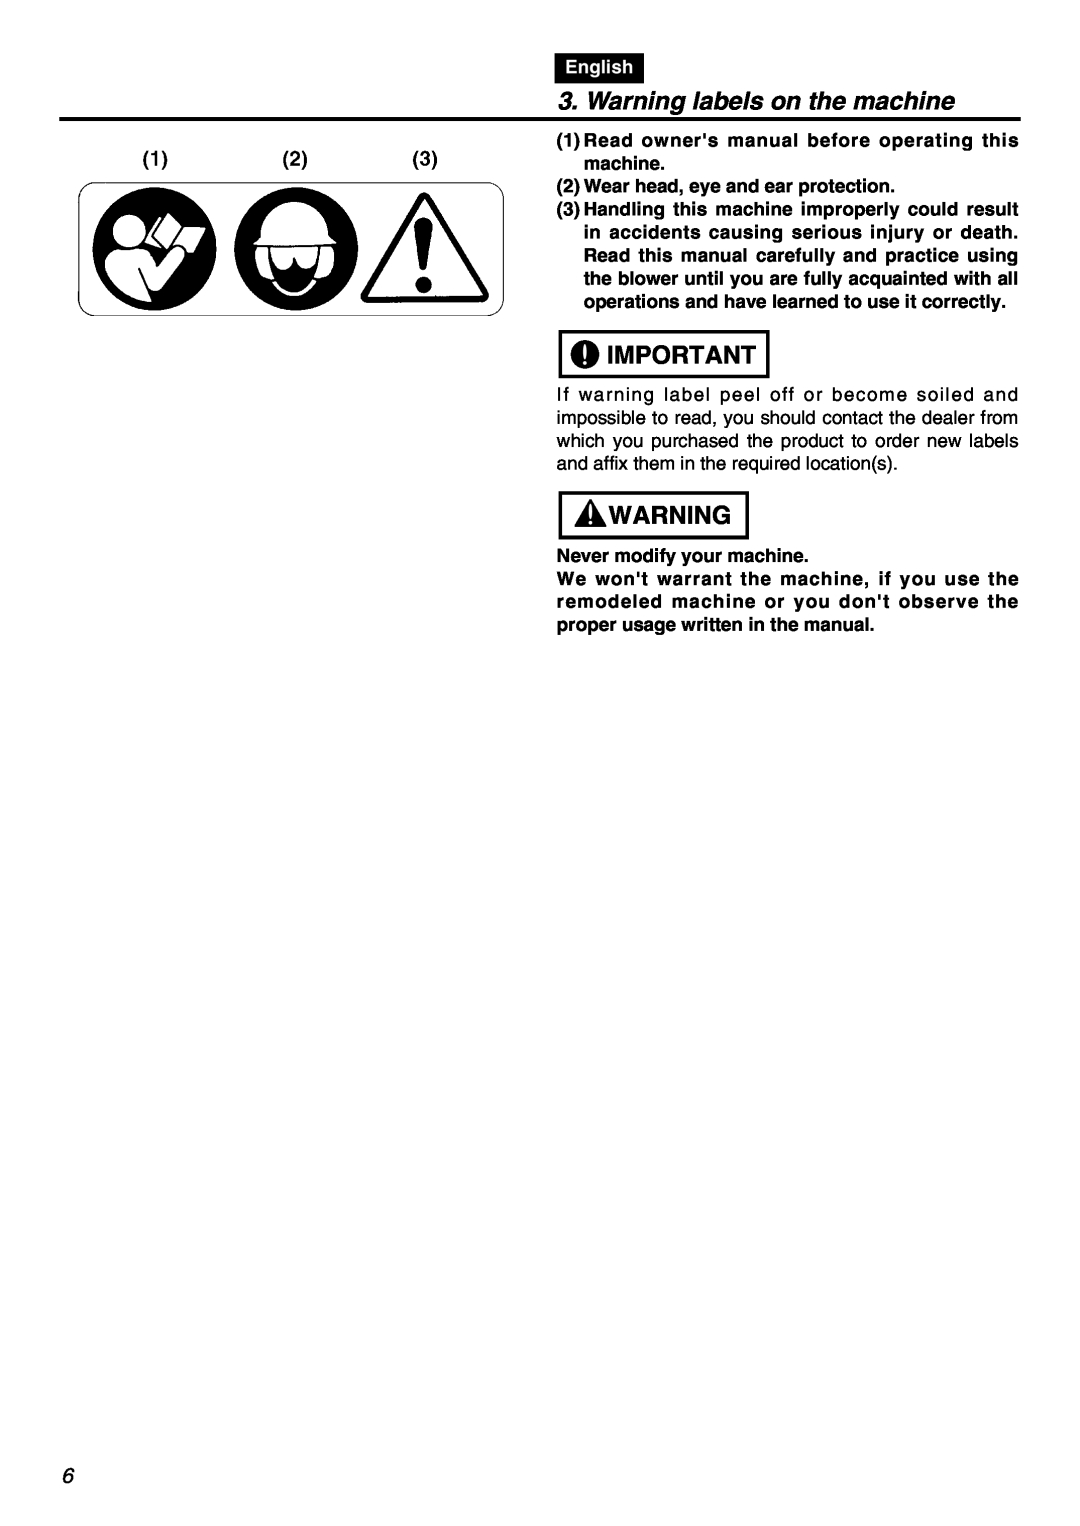 RedMax EBZ7100-CA, EBZ7100RH-CA manual Warning labels on the machine, English 